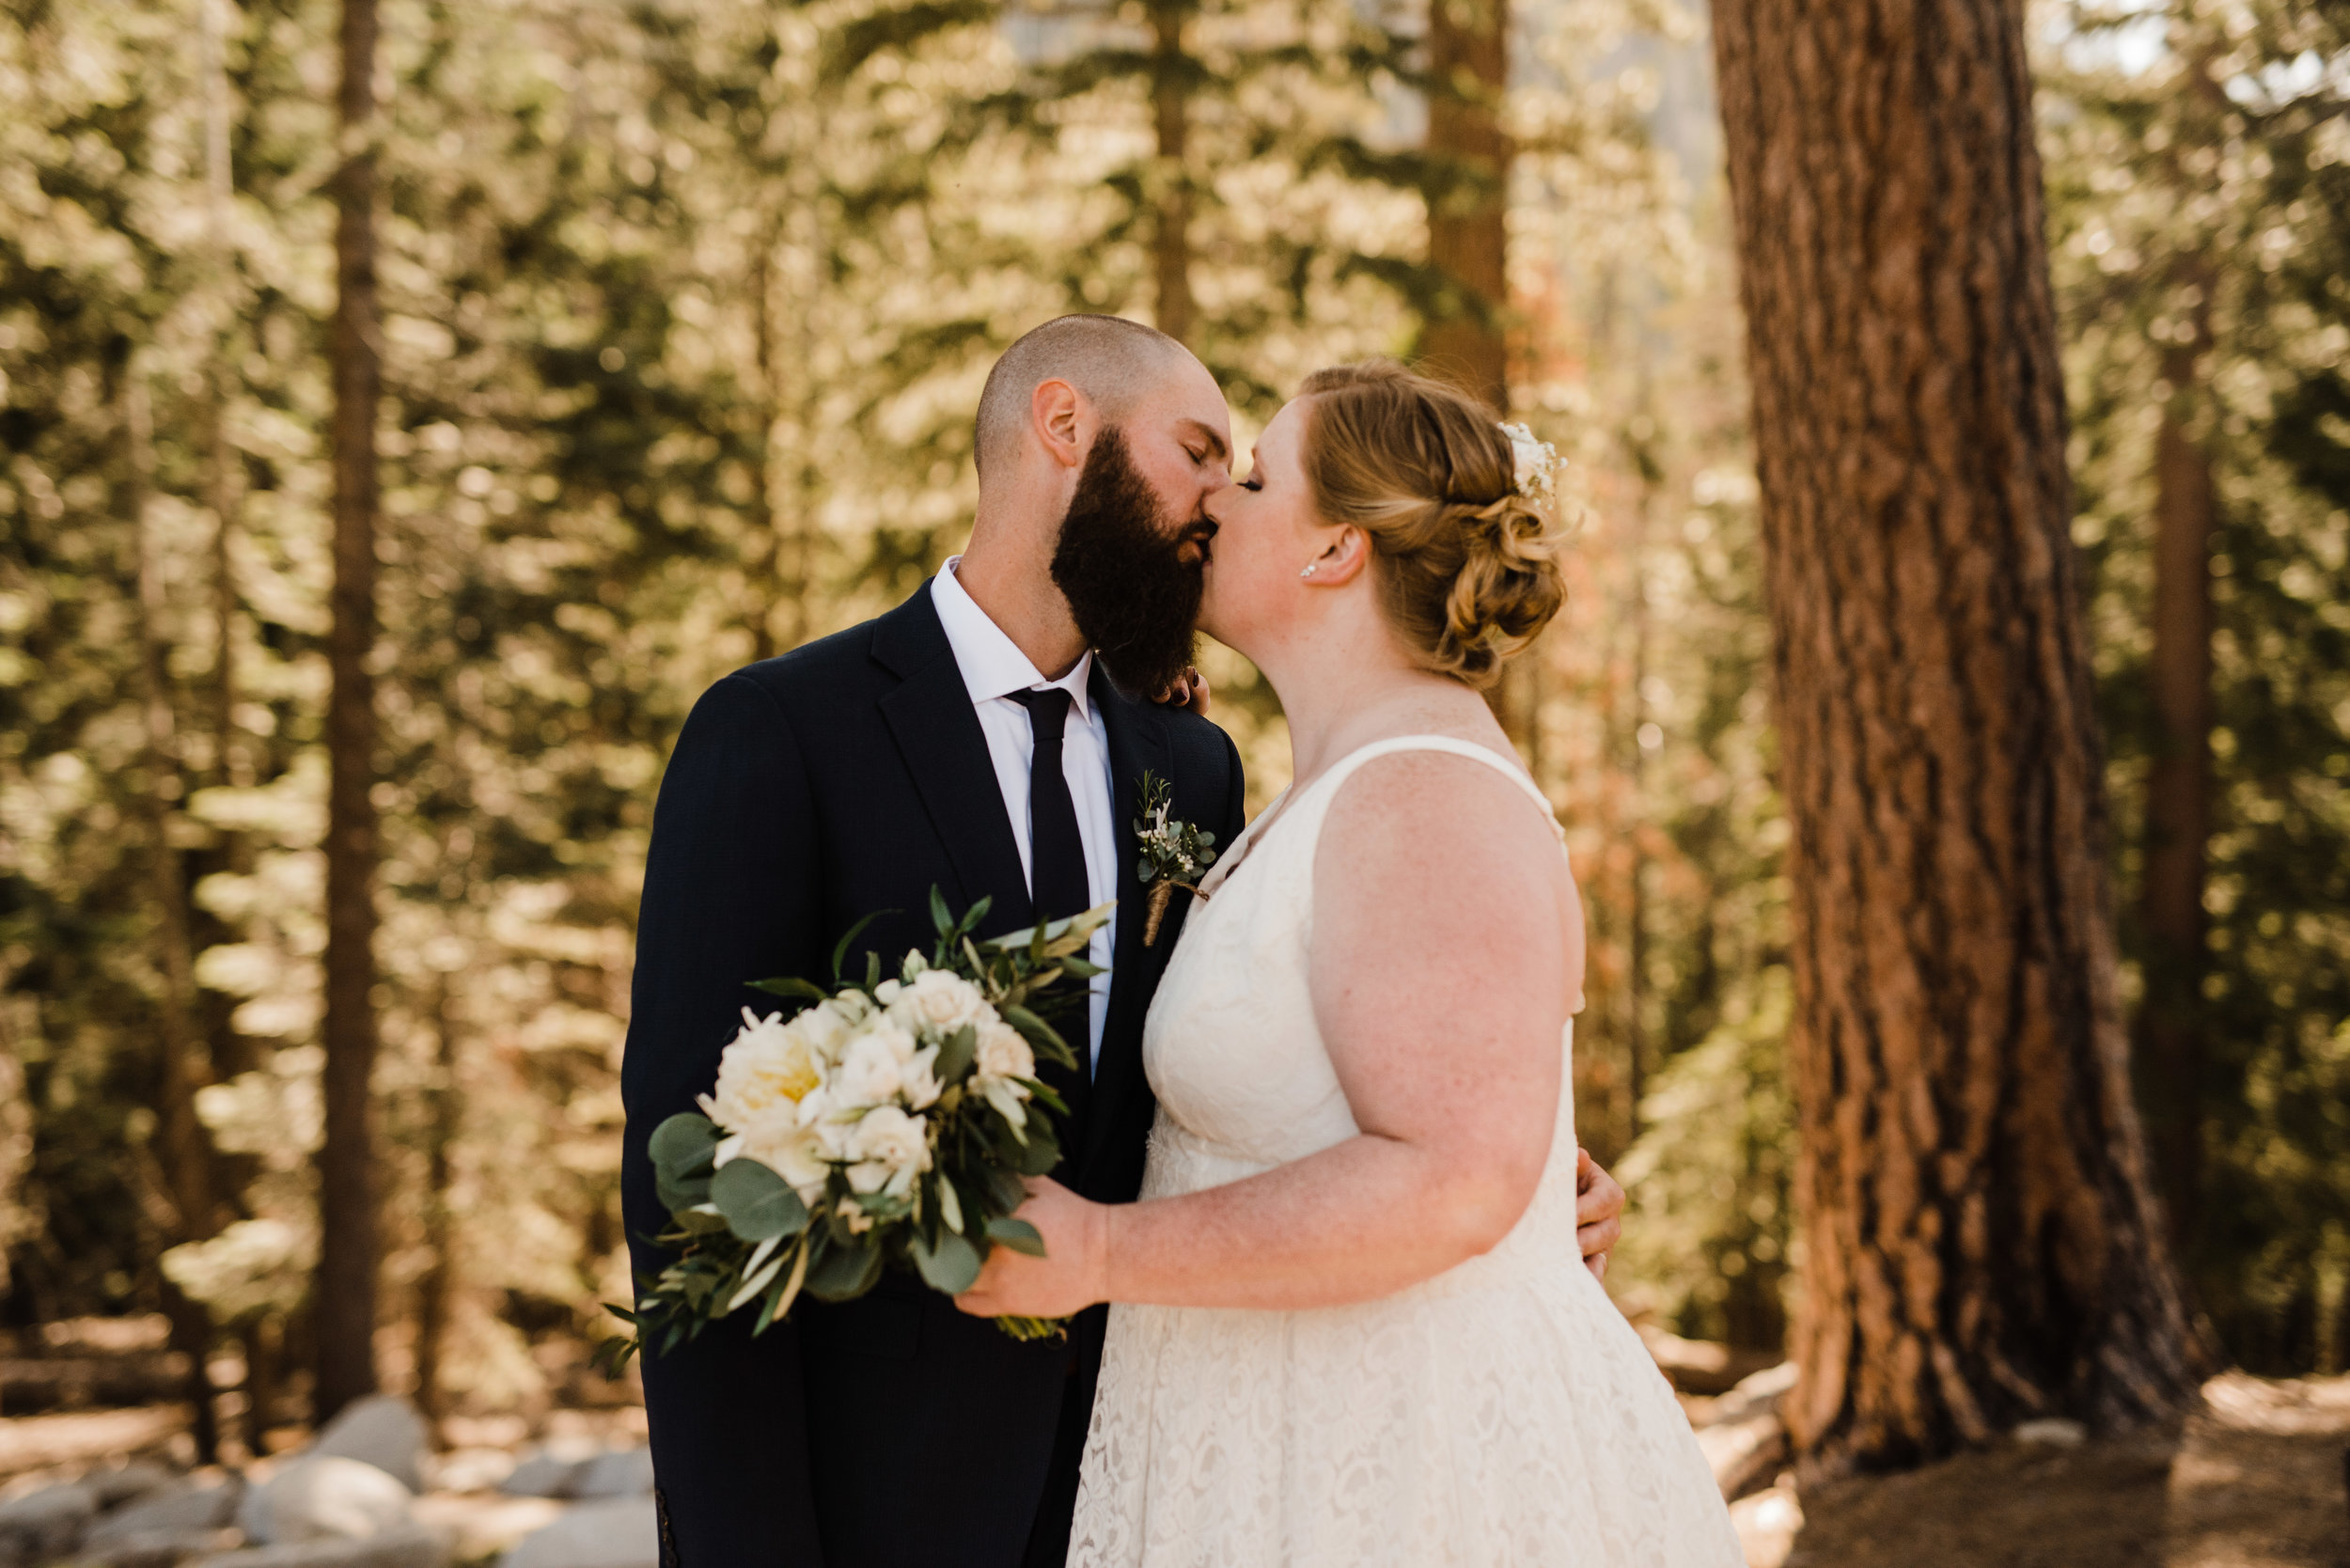 Summer Bride and Groom at Yosemite National Park